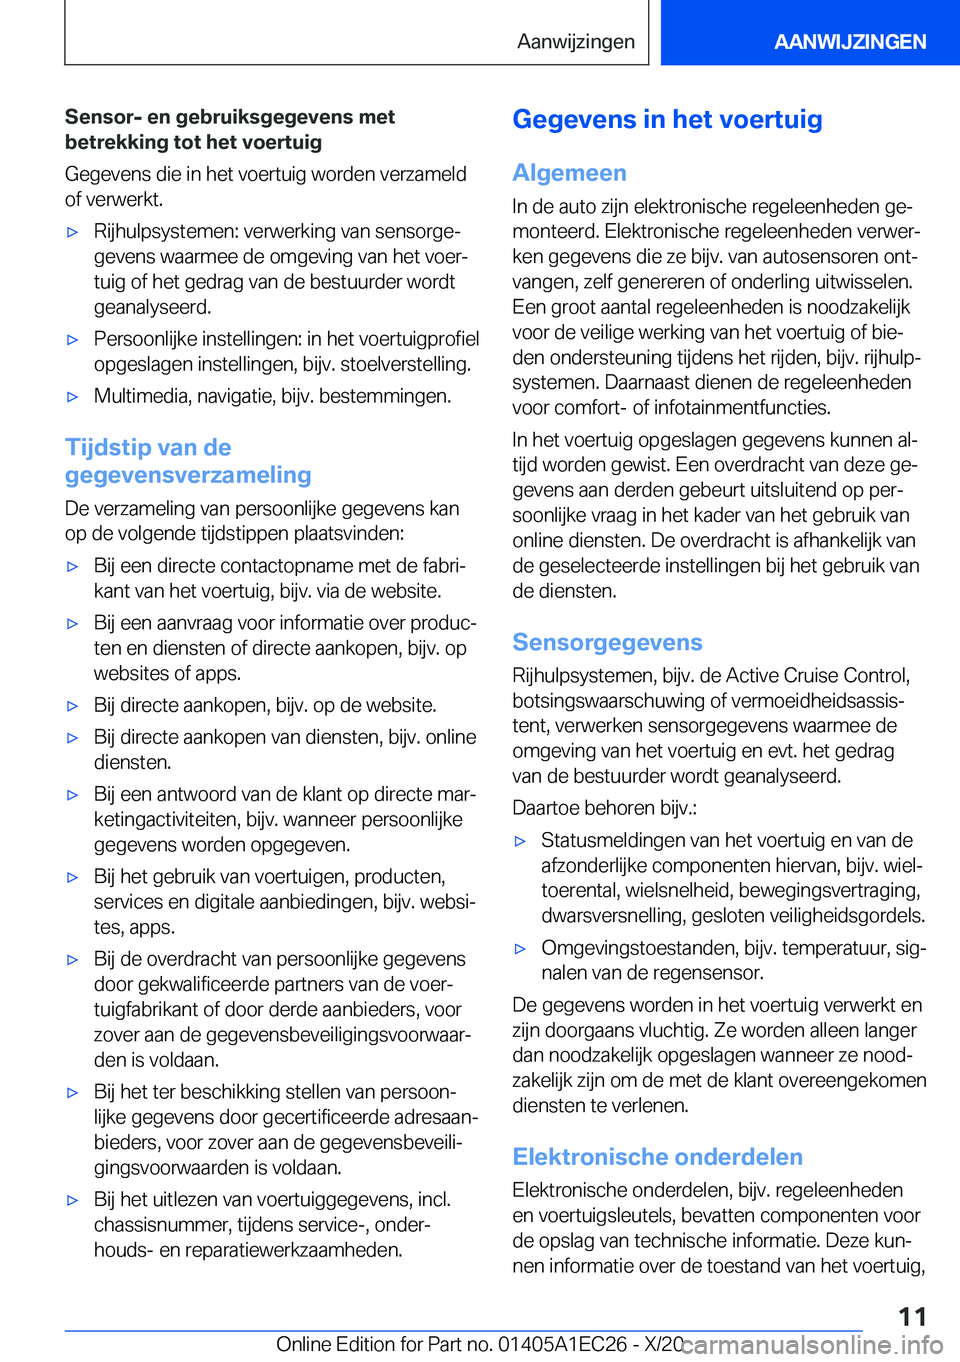 BMW 8 SERIES GRAN COUPE 2021  Instructieboekjes (in Dutch) �S�e�n�s�o�r�-��e�n��g�e�b�r�u�i�k�s�g�e�g�e�v�e�n�s��m�e�t�b�e�t�r�e�k�k�i�n�g��t�o�t��h�e�t��v�o�e�r�t�u�i�g
�G�e�g�e�v�e�n�s��d�i�e��i�n��h�e�t��v�o�e�r�t�u�i�g��w�o�r�d�e�n��v�e�r�z�a�